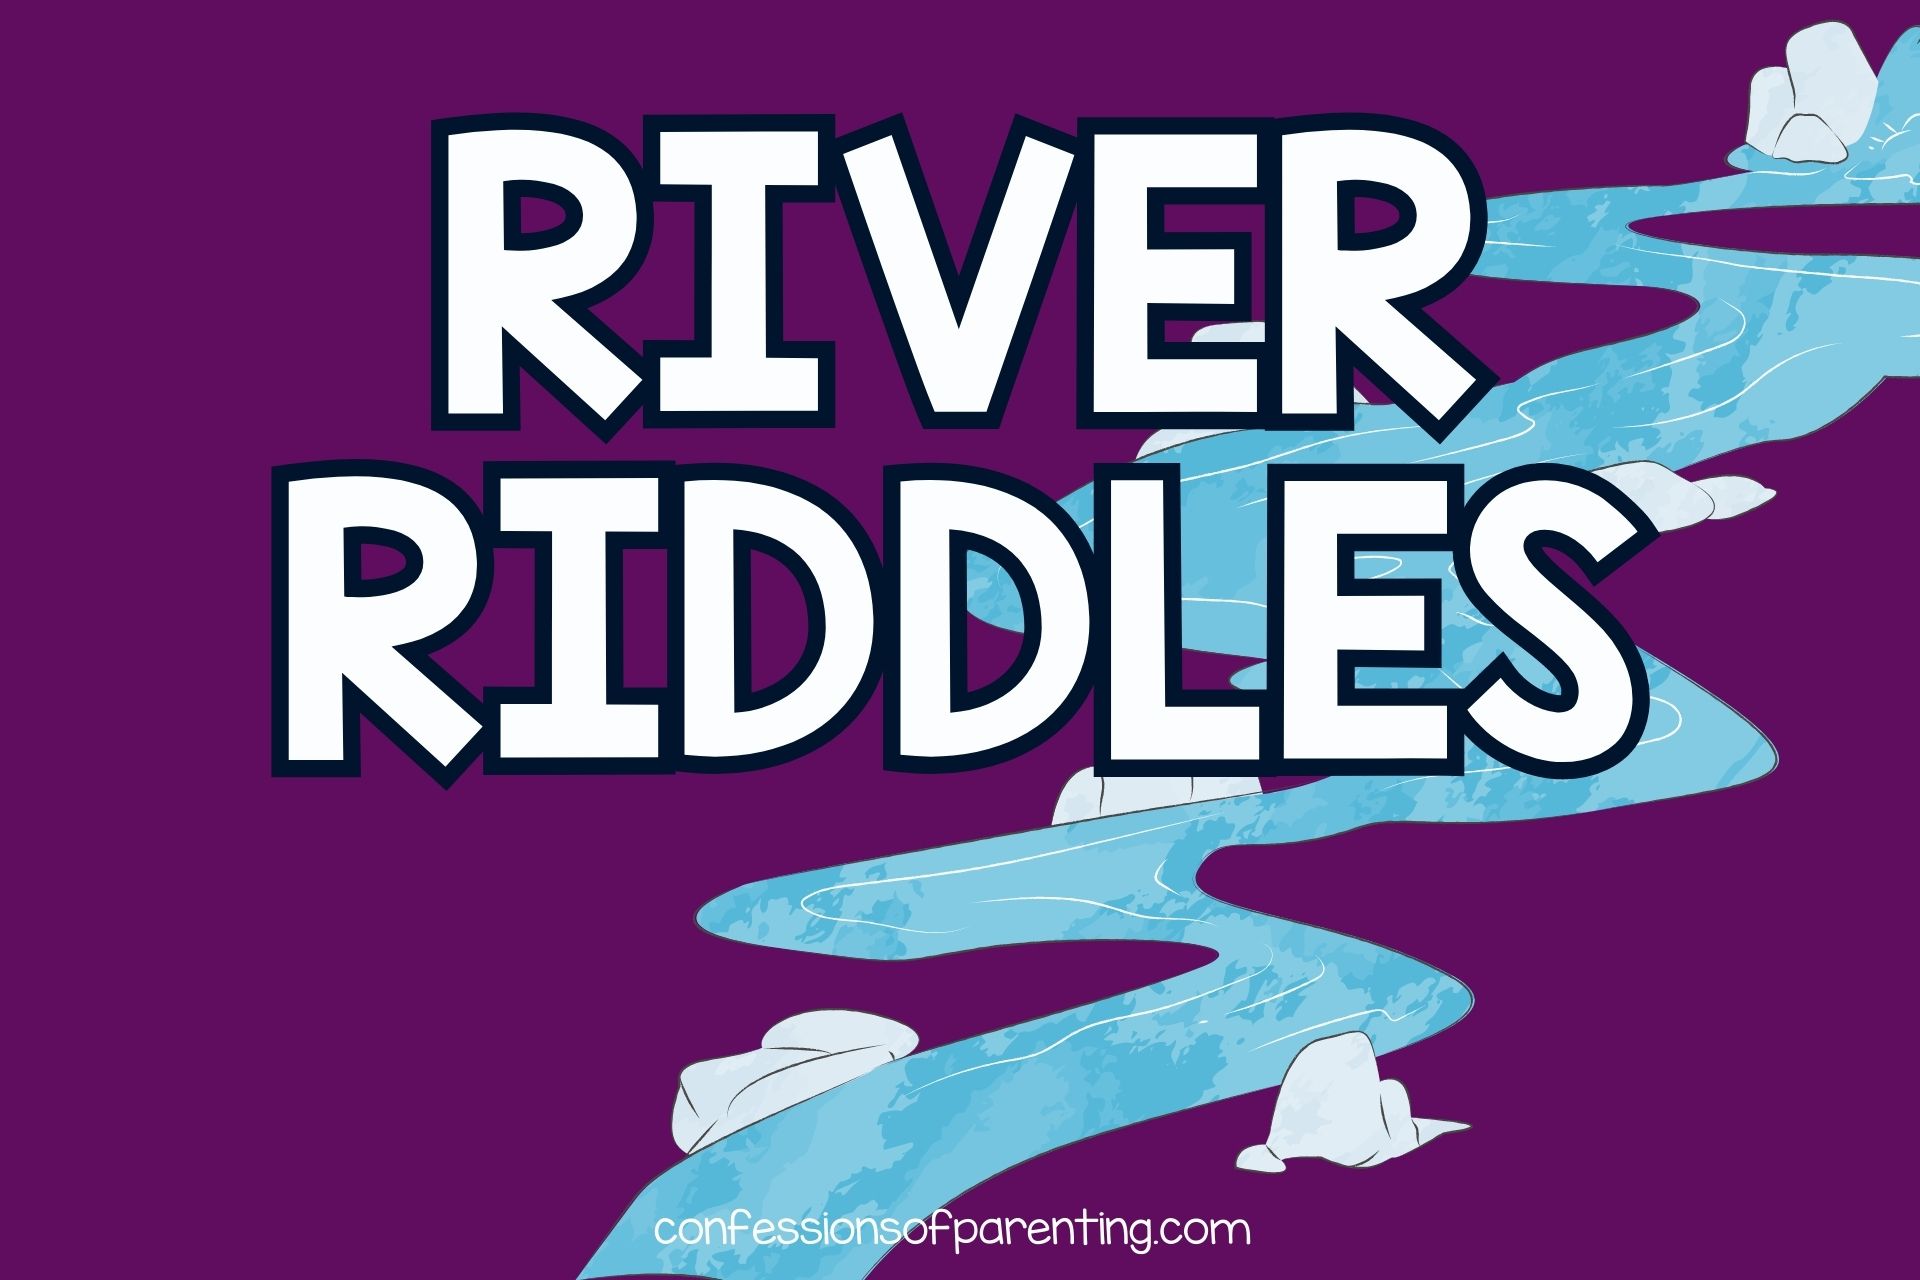 RIVER RIDDLES